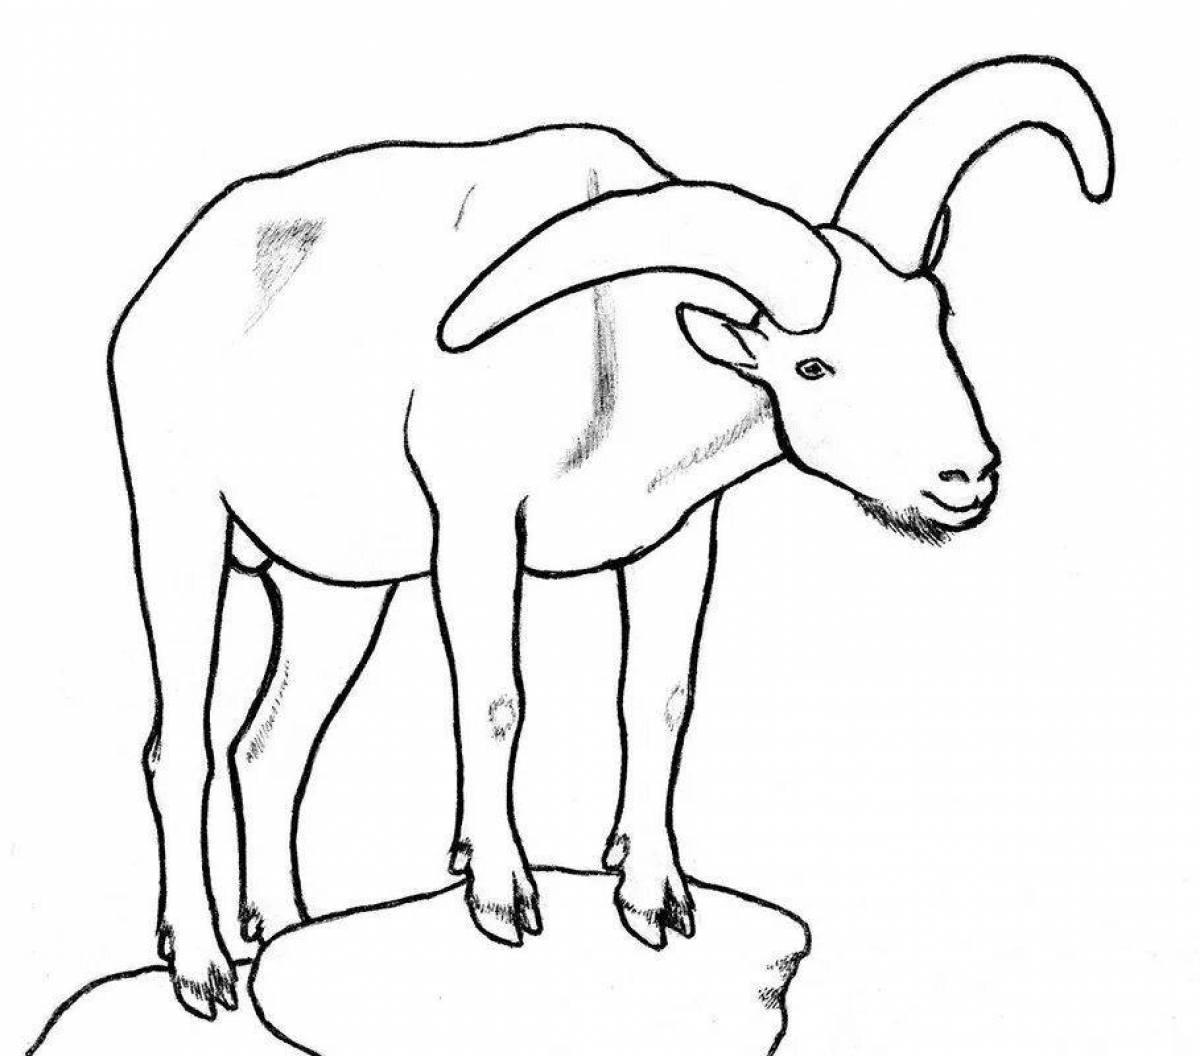 Goat #8